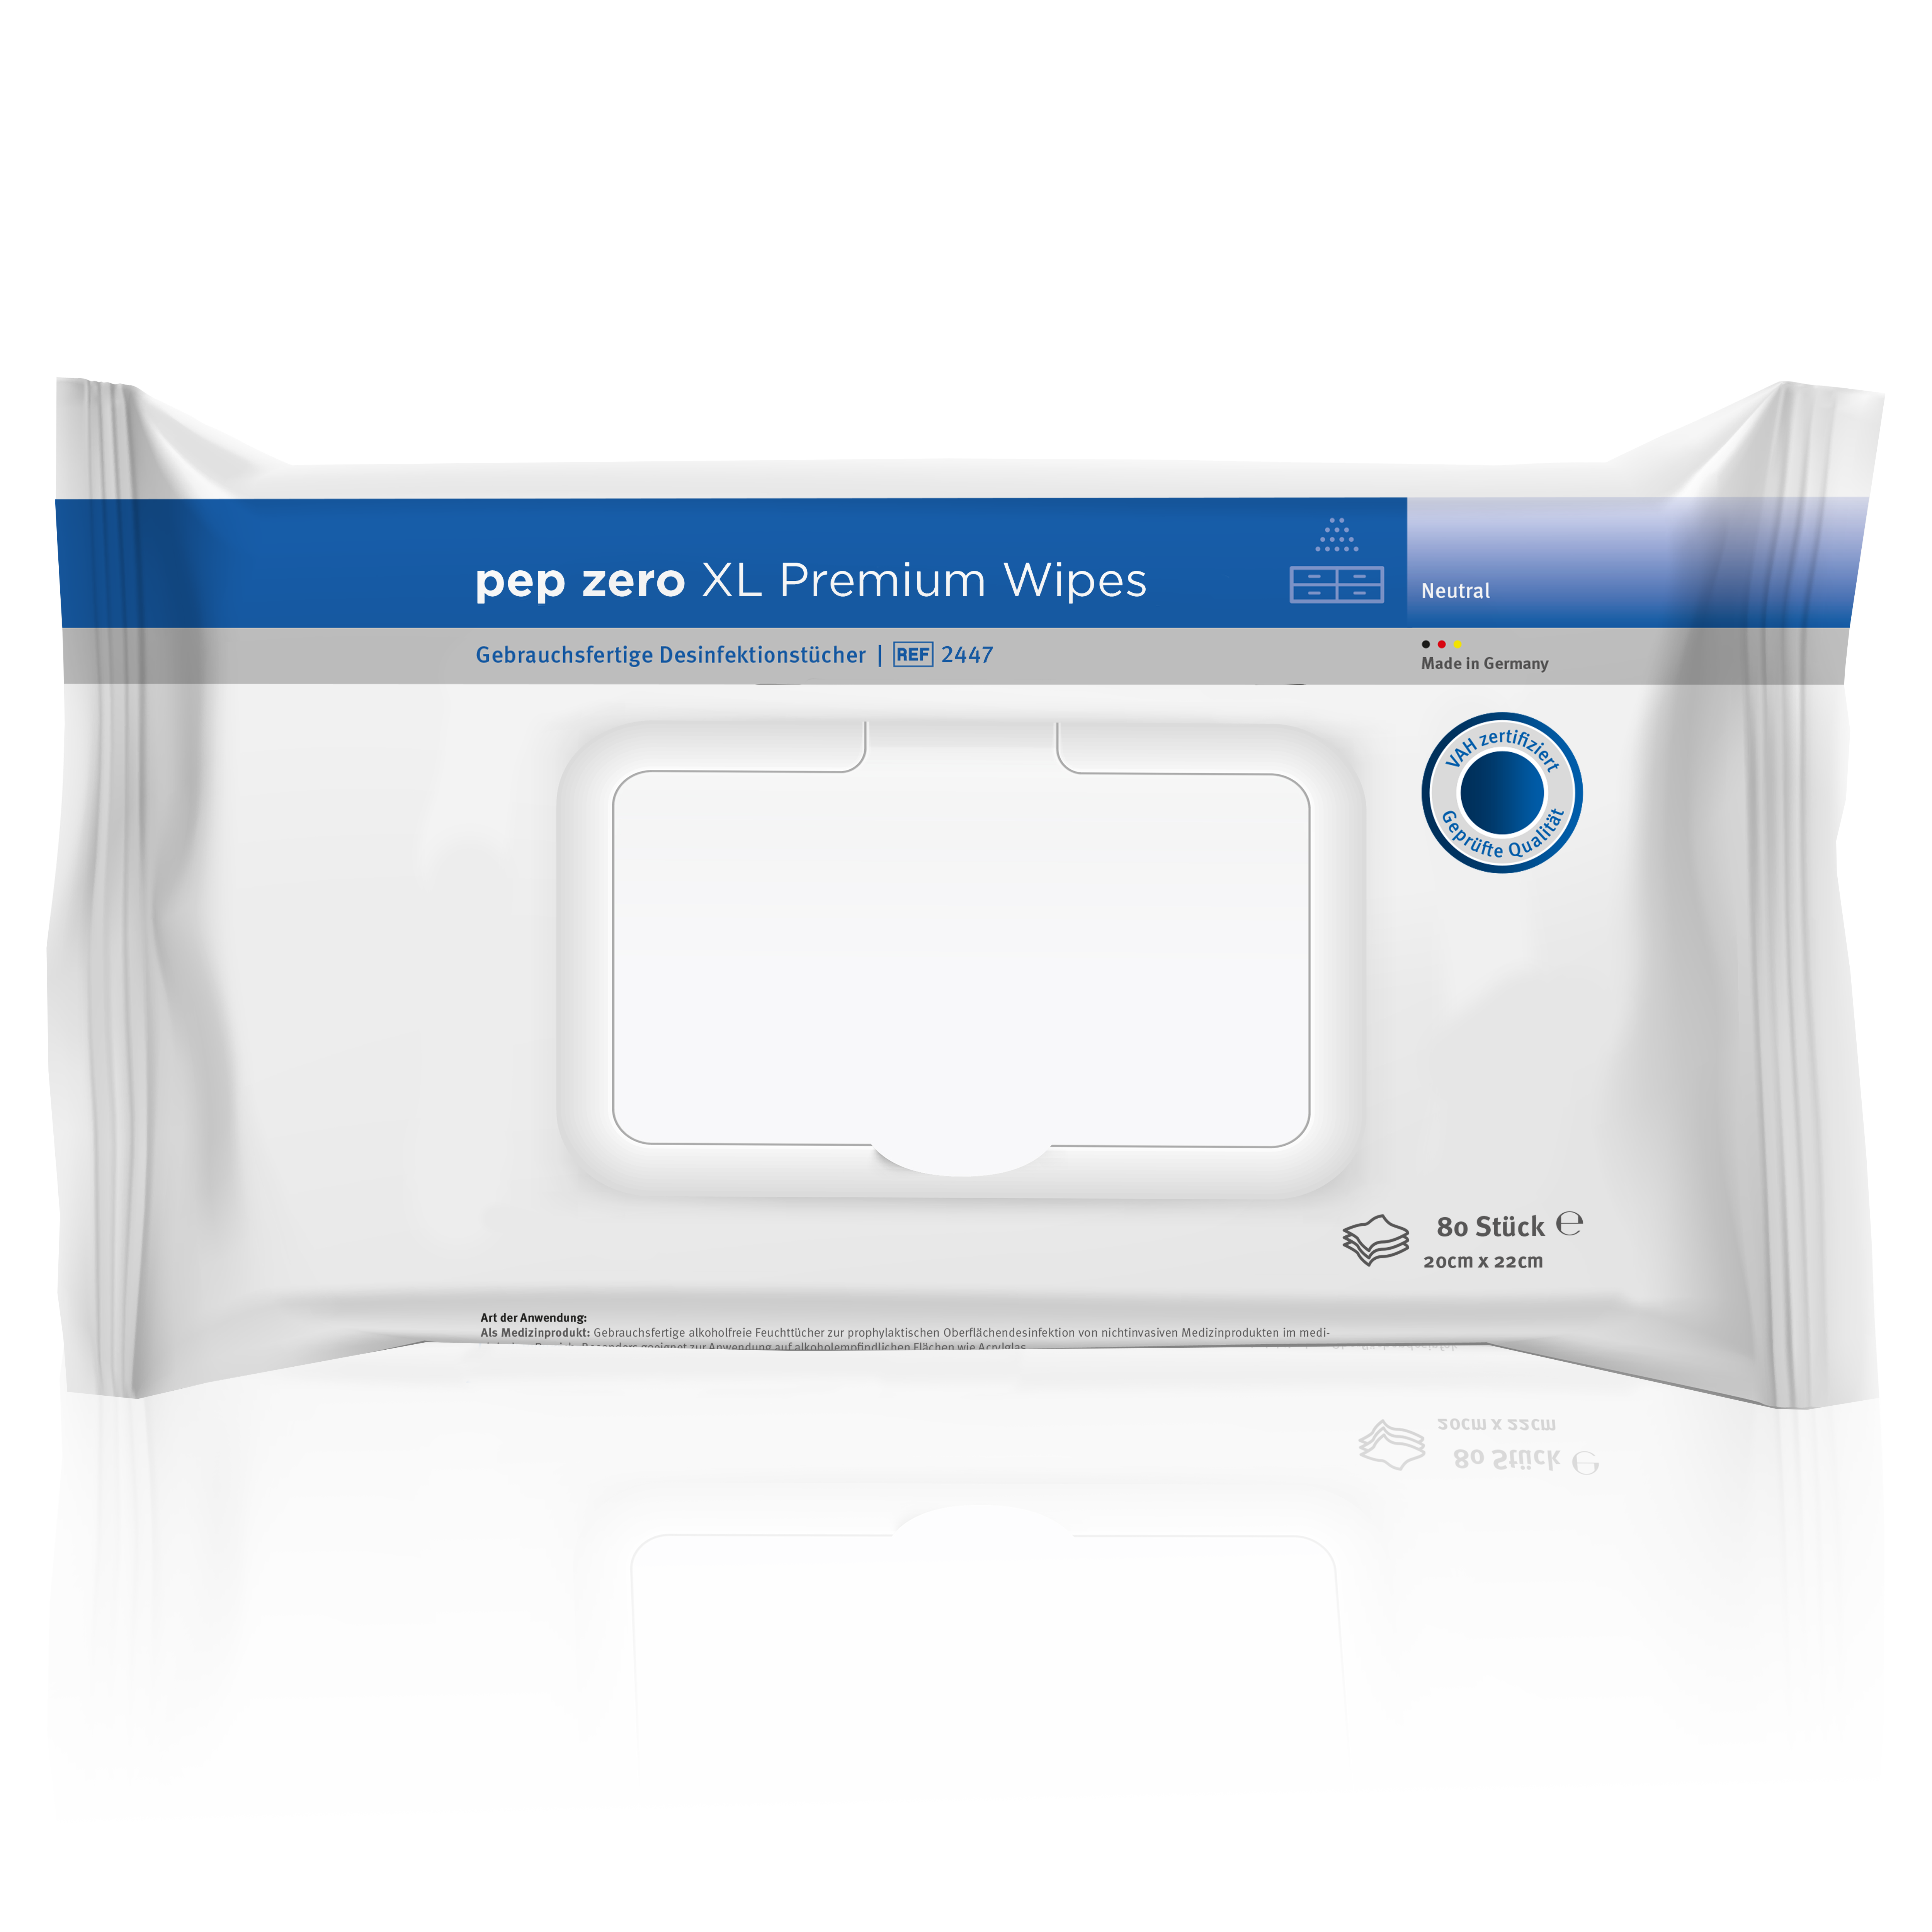 pep zero XL PremiumWipes, 80 gebrauchsfertige, alkoholfreie Desinfektionstücher, begrenzt viruzid